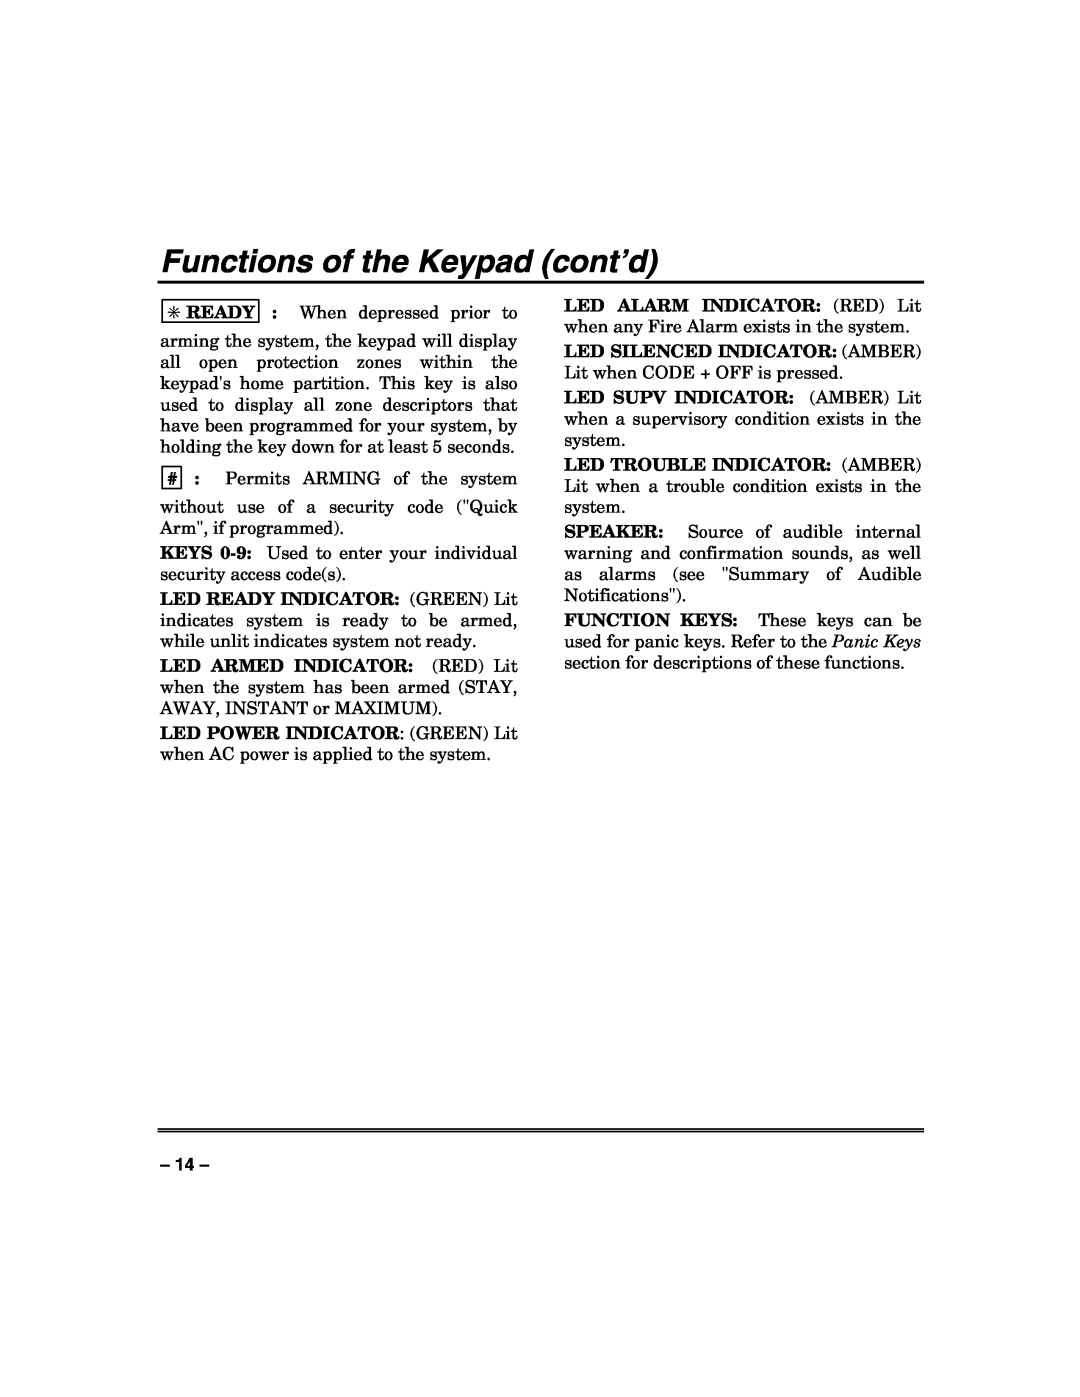 Honeywell VISTA-250FBP, VISTA-128FBP manual Functions of the Keypad cont’d 